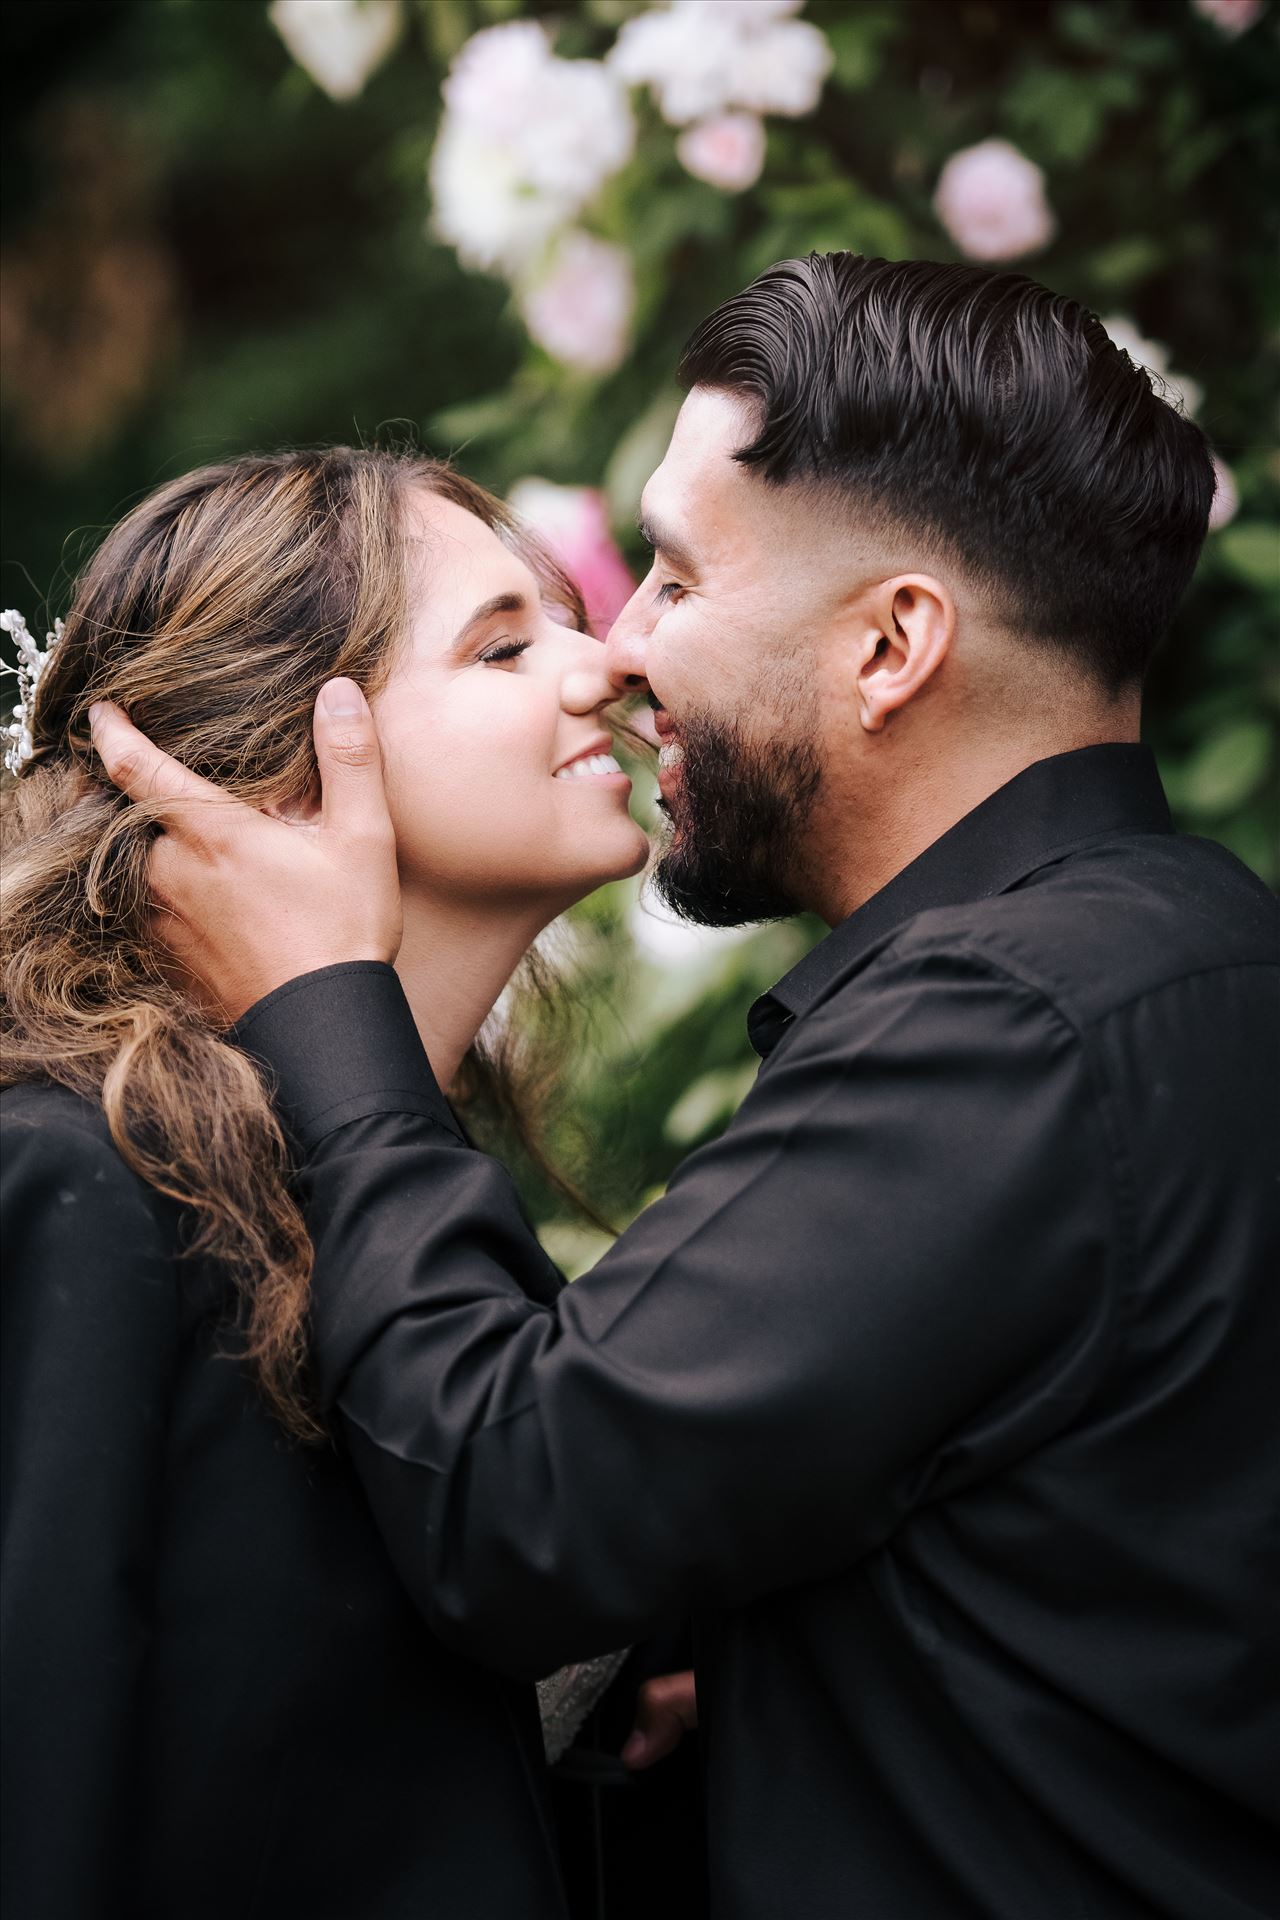 Final--3.JPG - Mirror's Edge Photography San Luis Obispo and Santa Barbara County Wedding Photographer. Kaleidoscope Inn and Gardens Wedding. Bride and Groom Romantic Kiss. by Sarah Williams